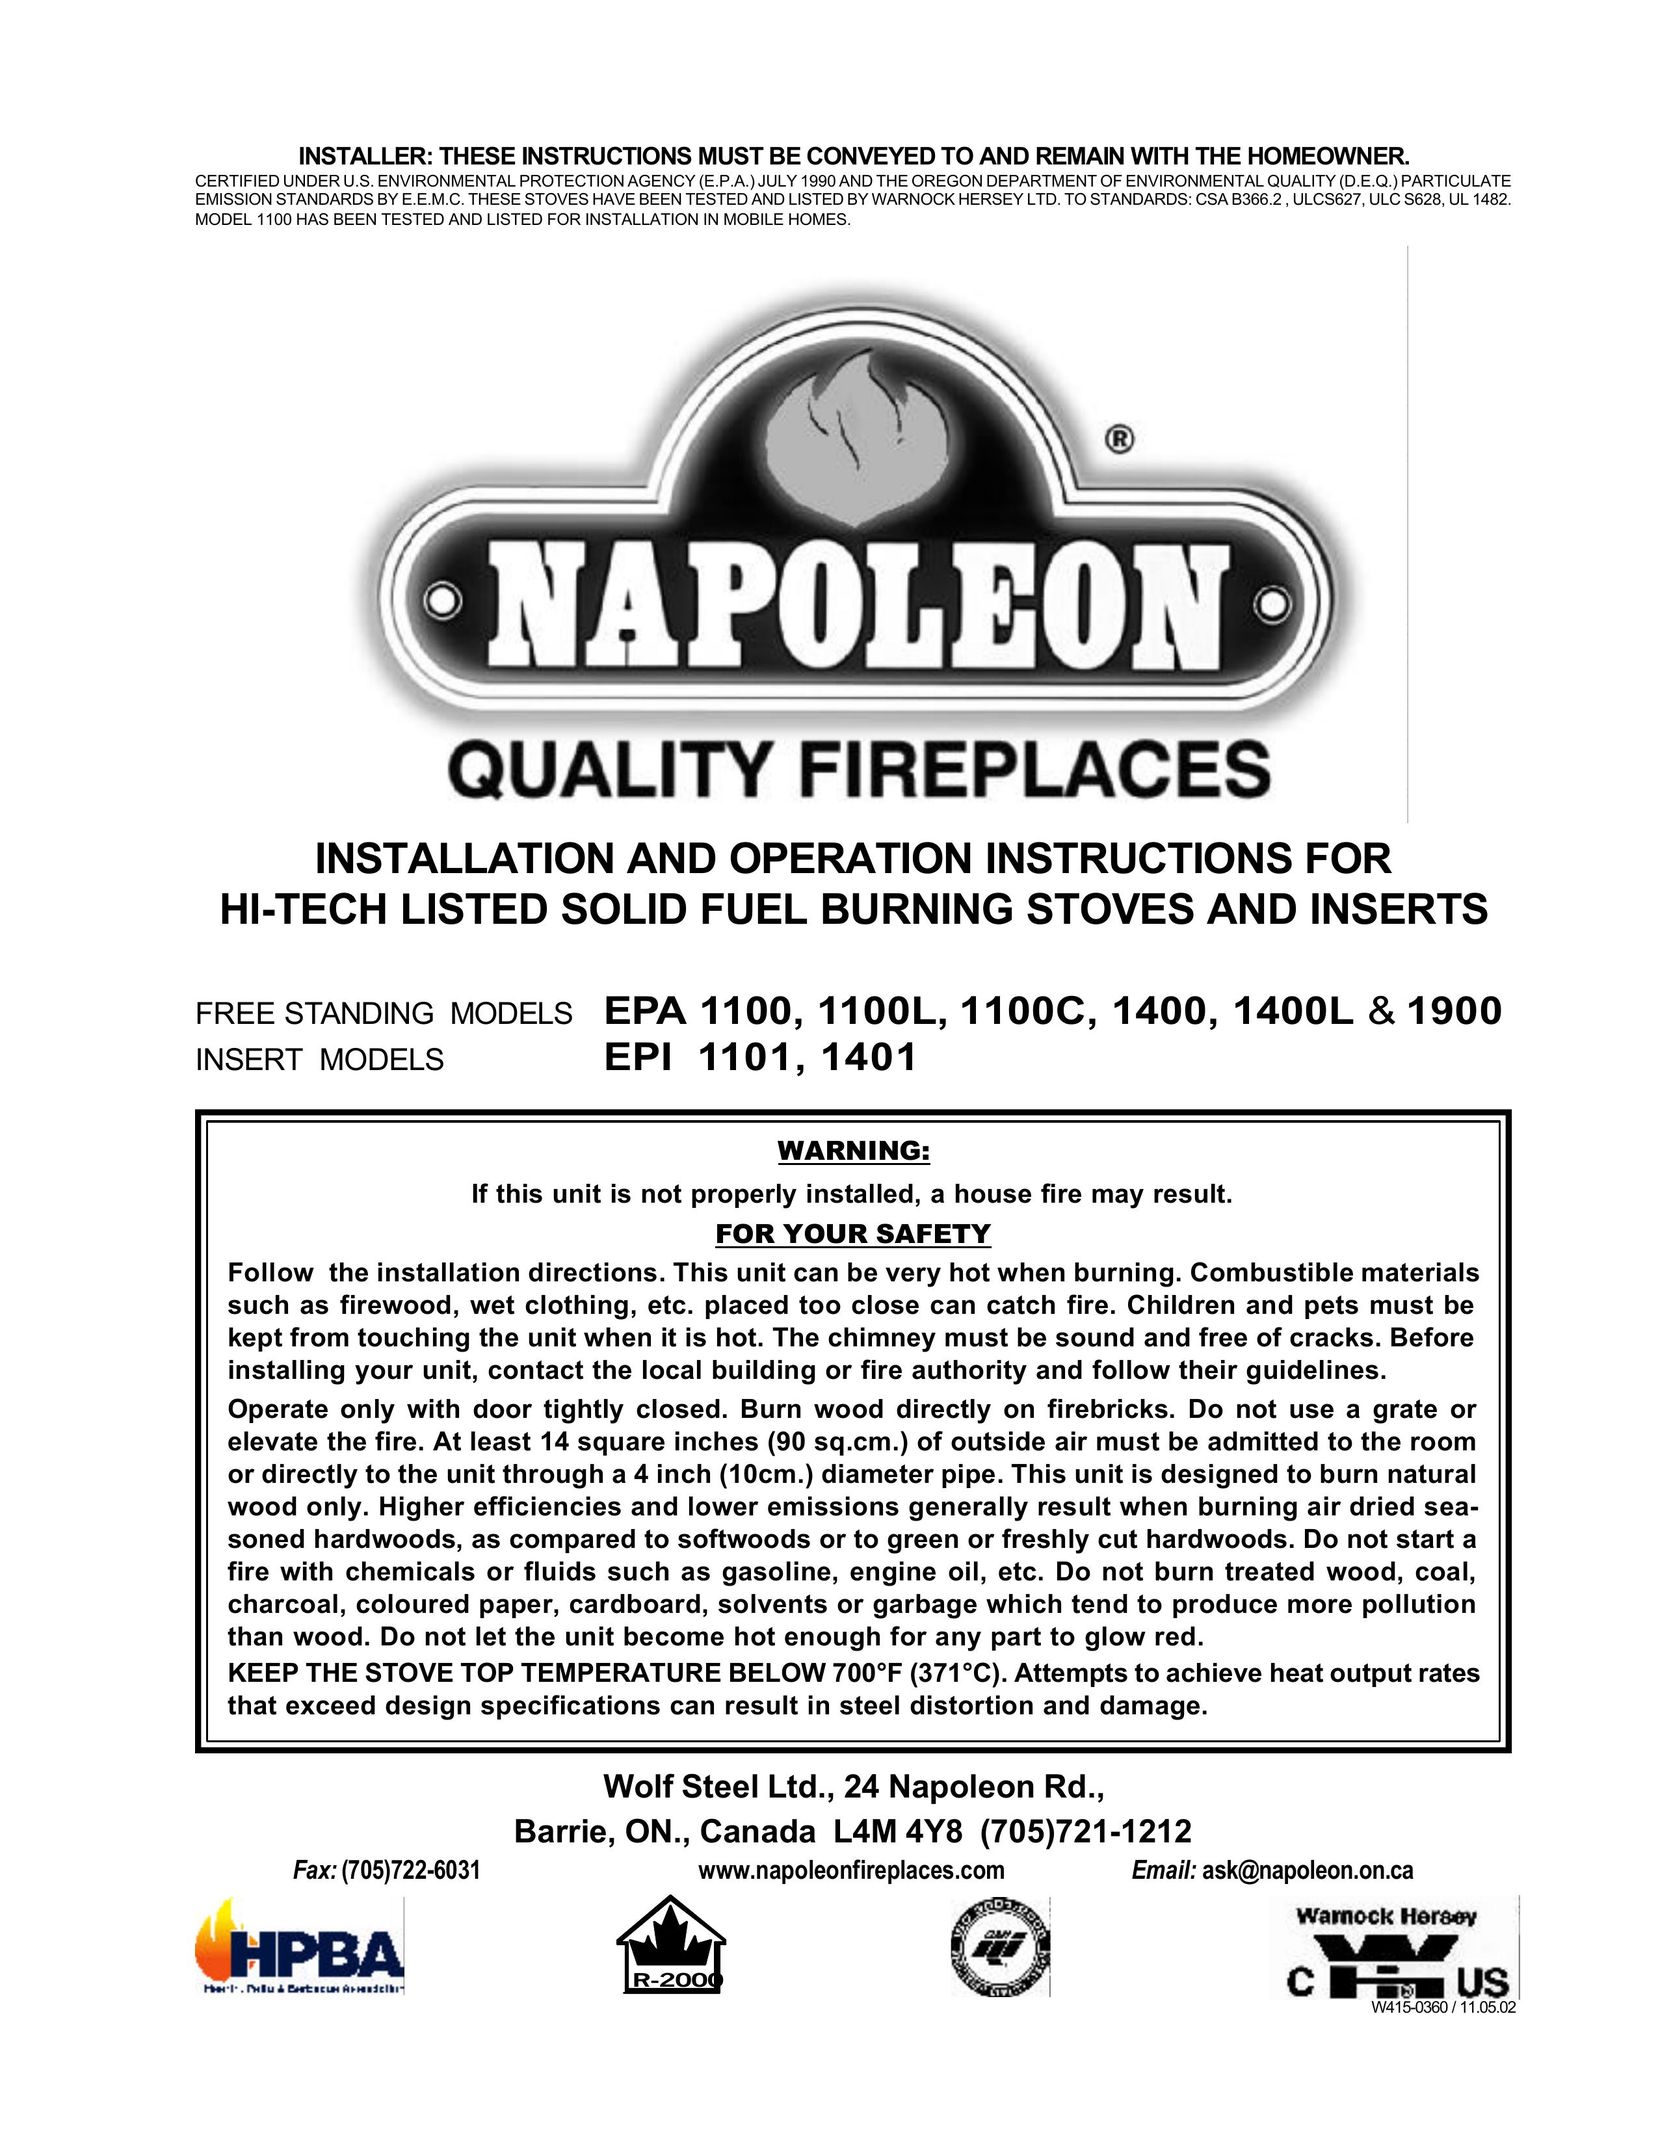 Napoleon Fireplaces EPI 1101 Stove User Manual